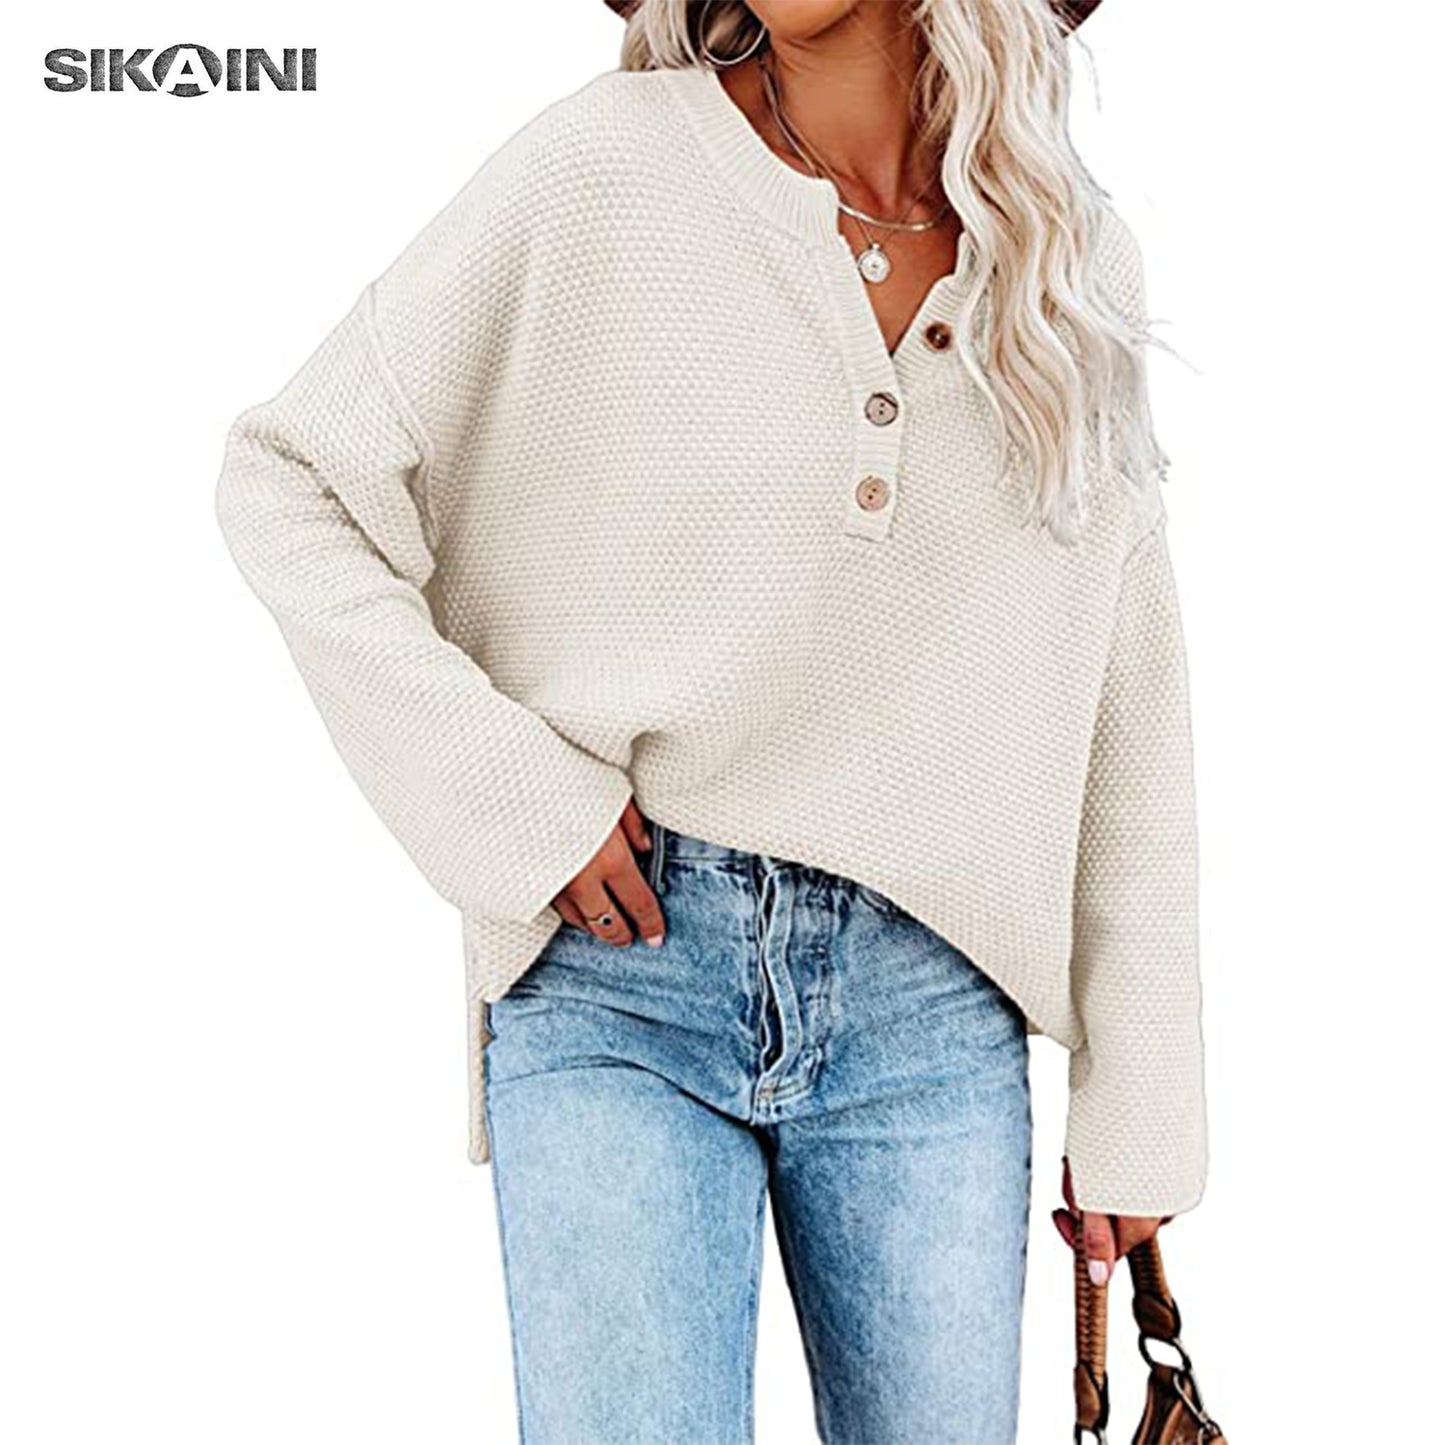 SIKAINI Women's Oversized Sweaters Batwing Long Sleeve